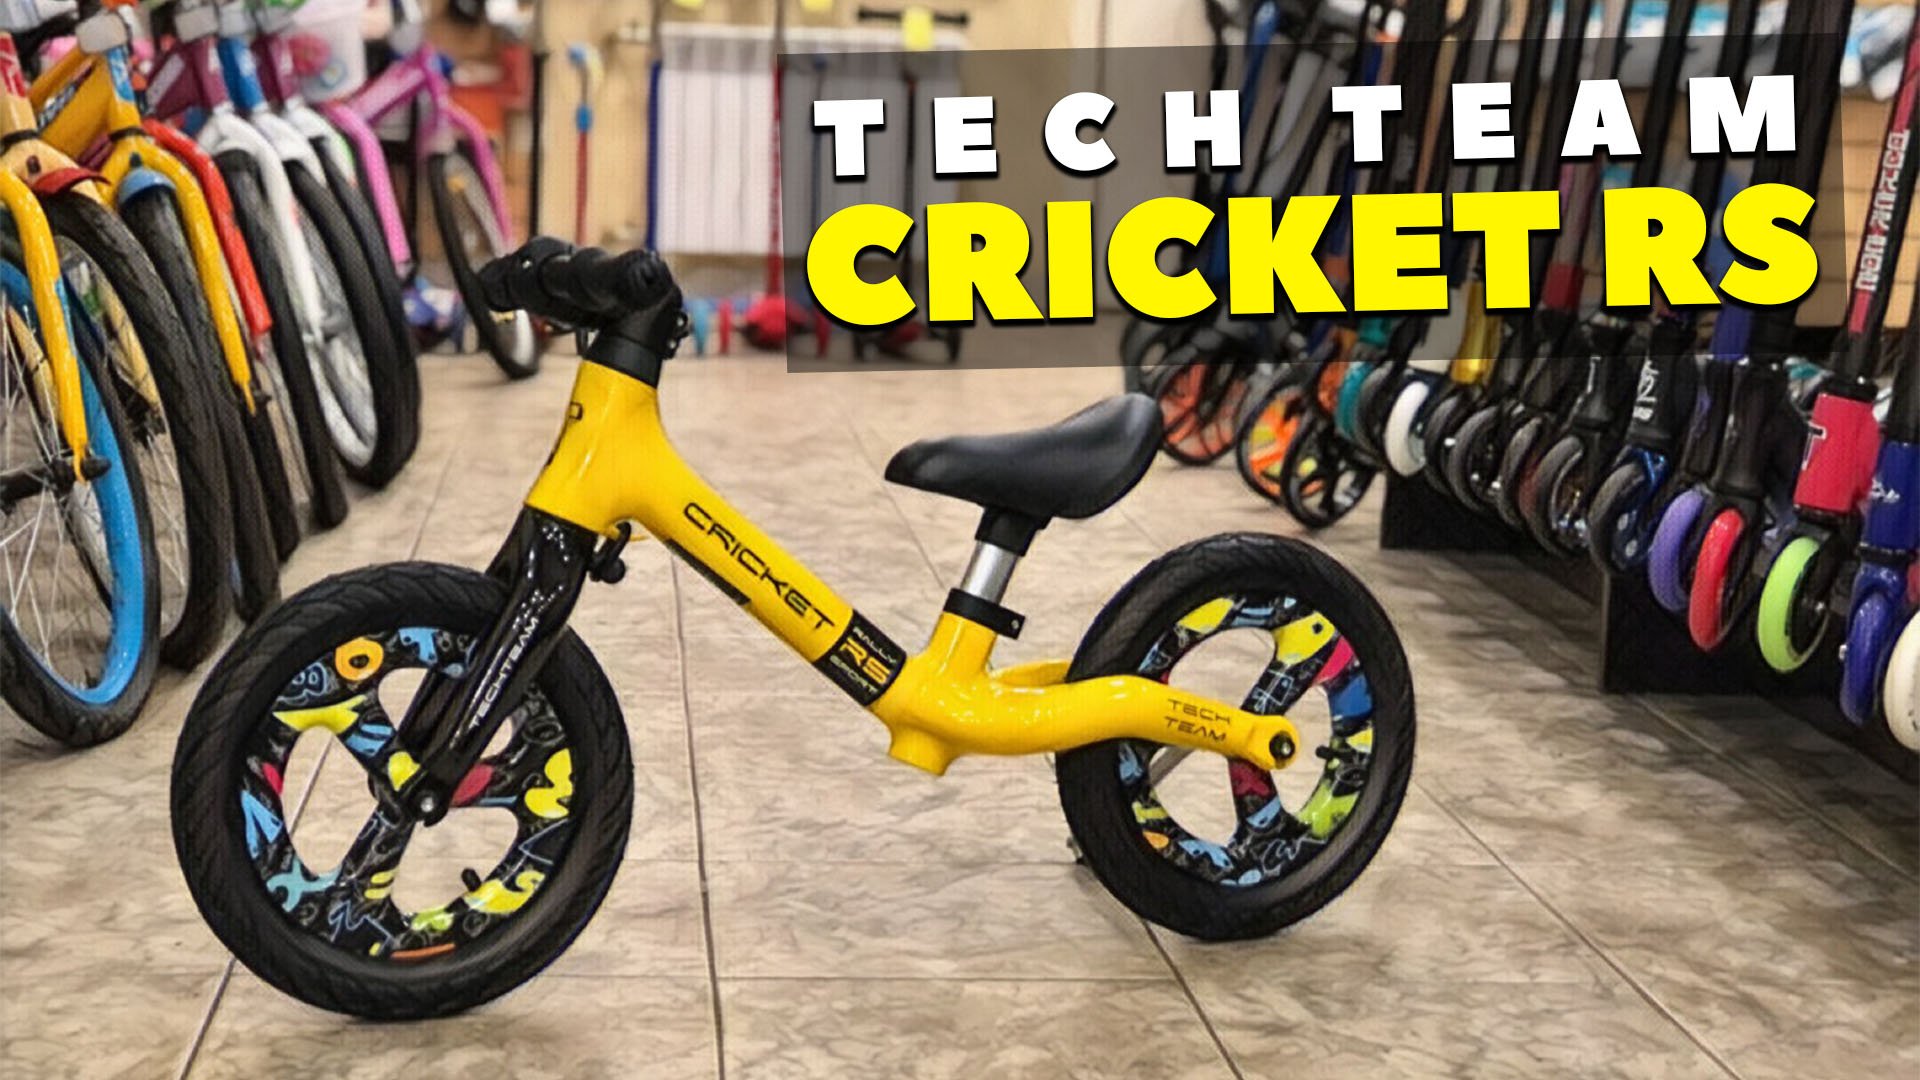 Беговел team. Беговел Tech Team Cricket. Беговел Tech Team Cricket RS. Беговел Tech Team Cricket RS эtech Team. Tech Team беговел Spider красный 1. 1.